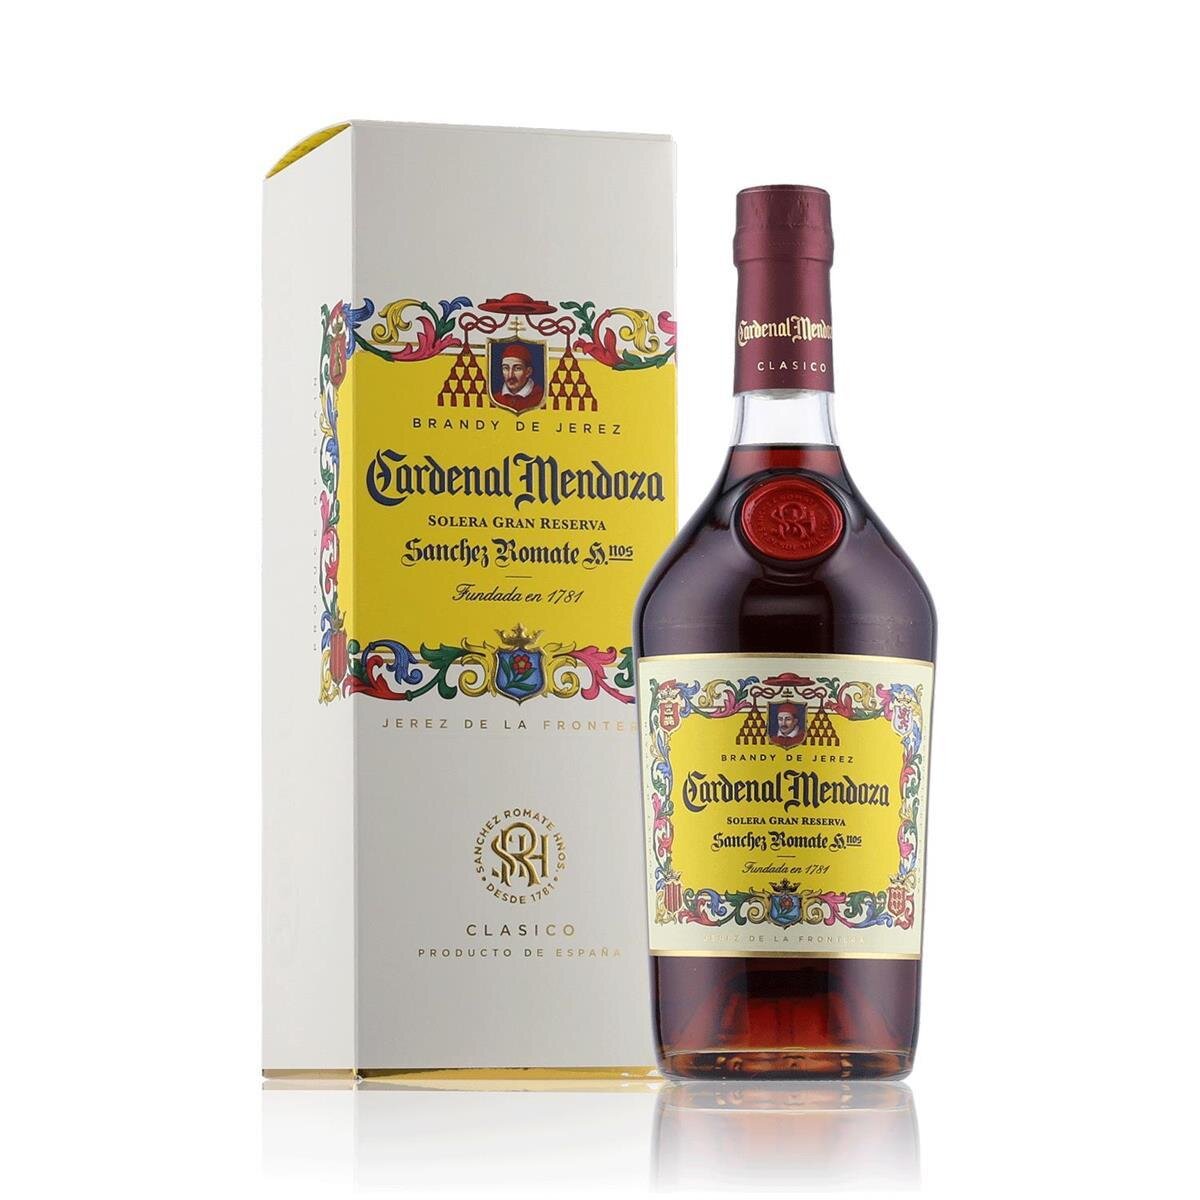 Cardenal Mendoza Solera Gran Vol. Brandy Reserva in 0,7l Geschenk 40